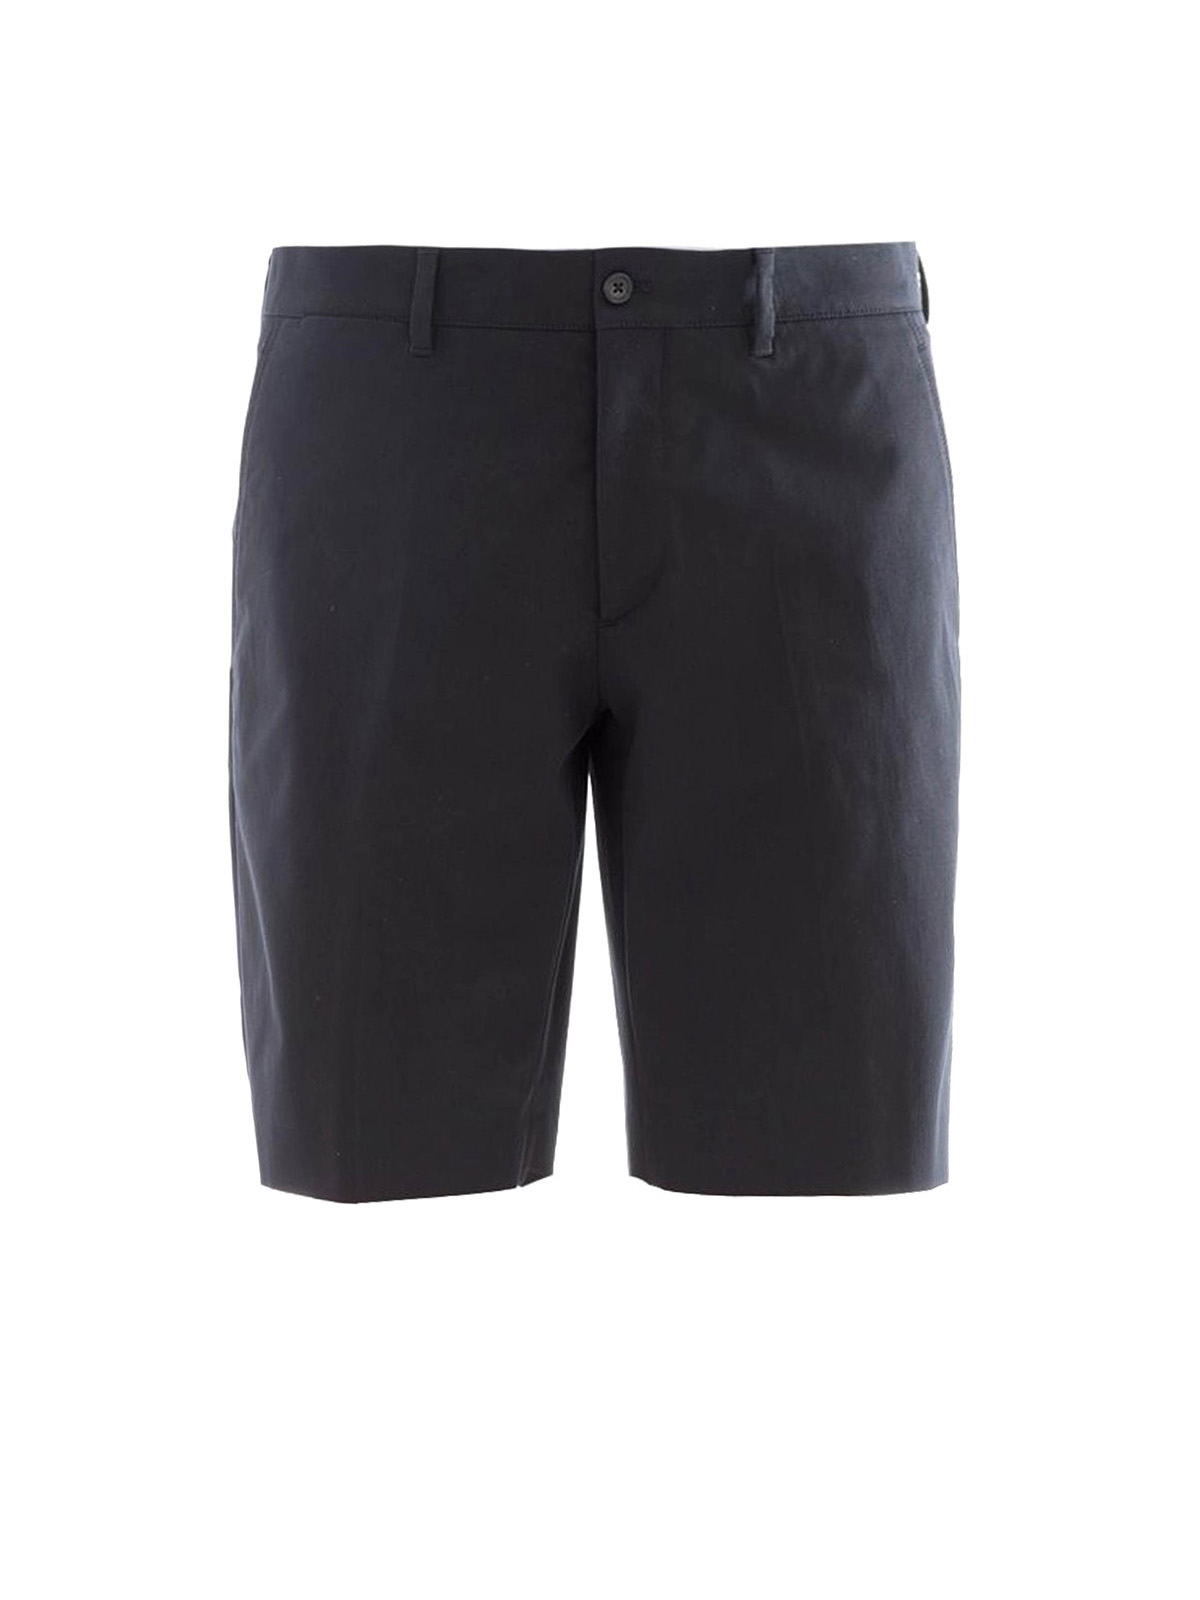 Trousers Shorts Prada - Dark blue cotton blend chino shorts -  SPE22S1211GQSF0008